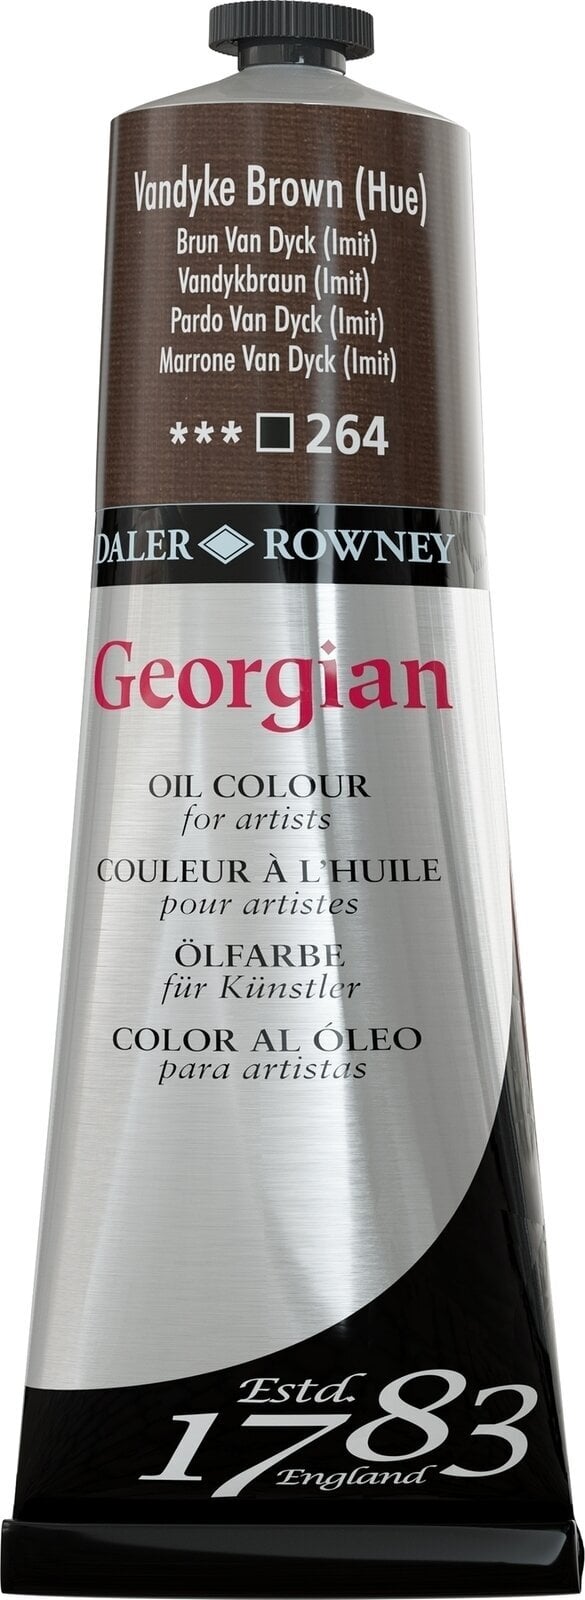 Oil colour Daler Rowney Georgian Oil Paint Vandyke Brown Hue 225 ml 1 pc